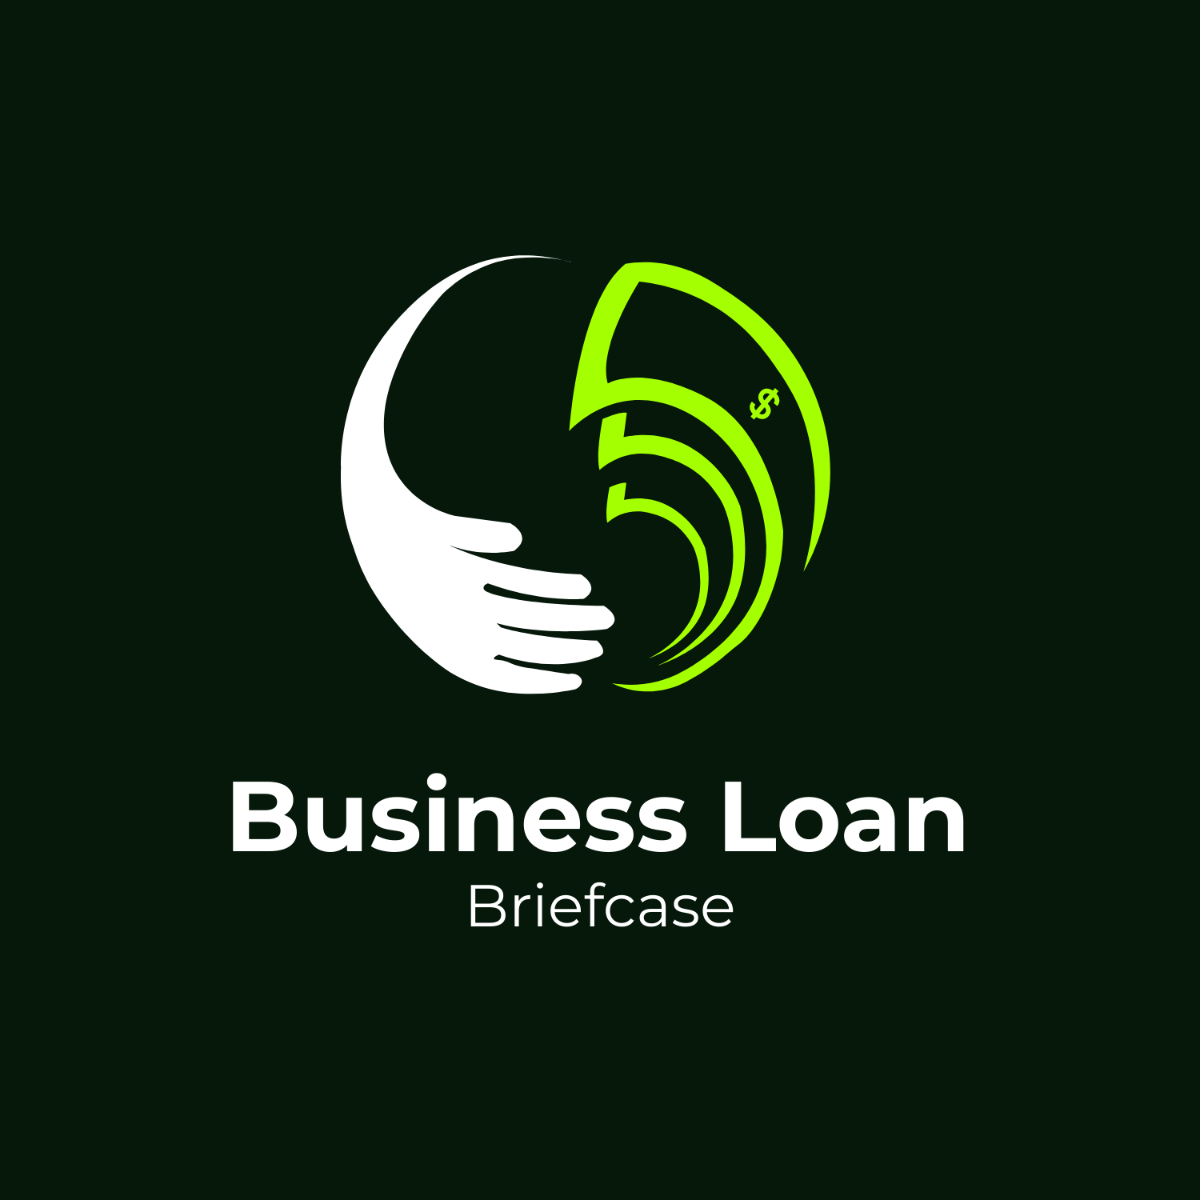 Business Loan Briefcase Logo Template